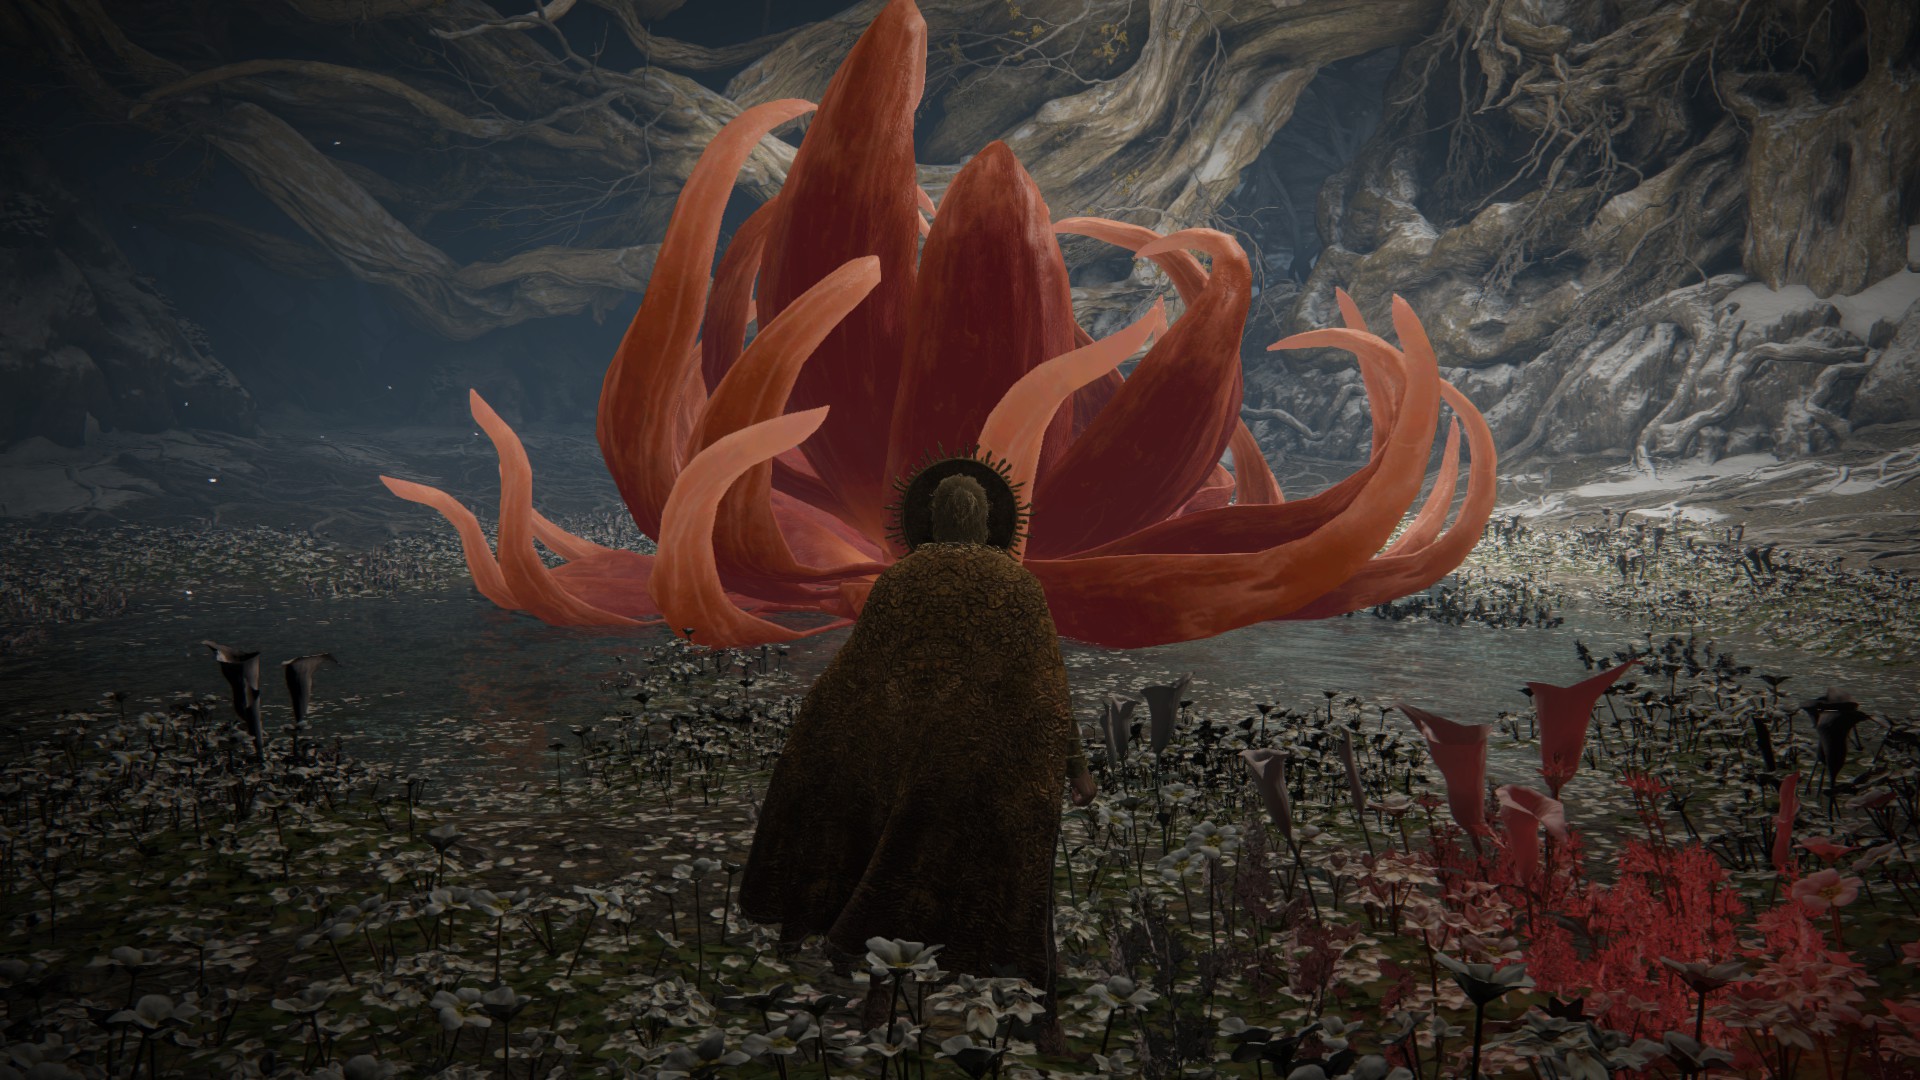 Elden Ring Malenia's bloom